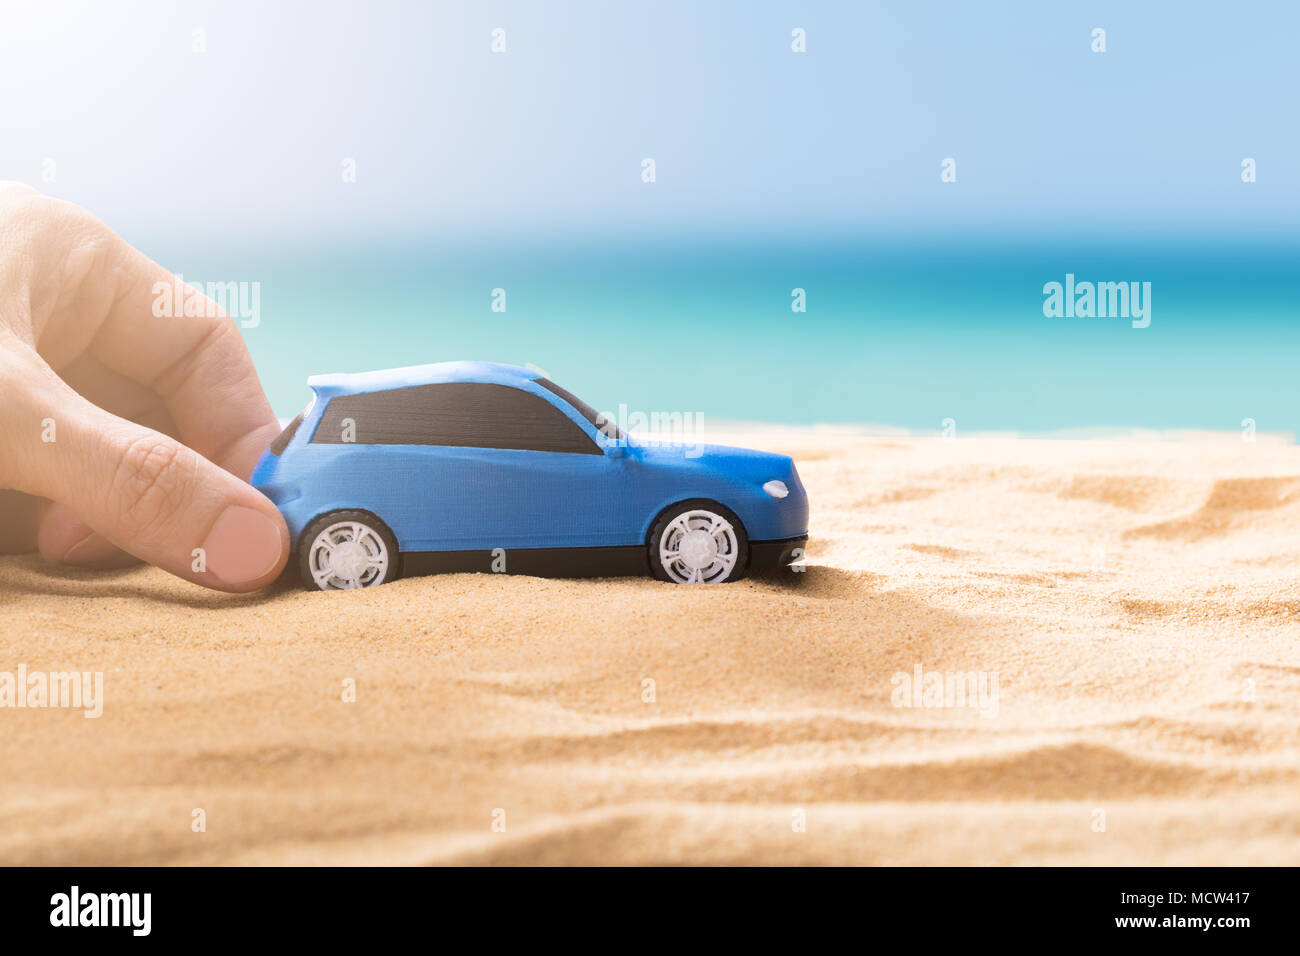 Human Hand Holding Small Blue Car On Sandy Beach Stock Photo